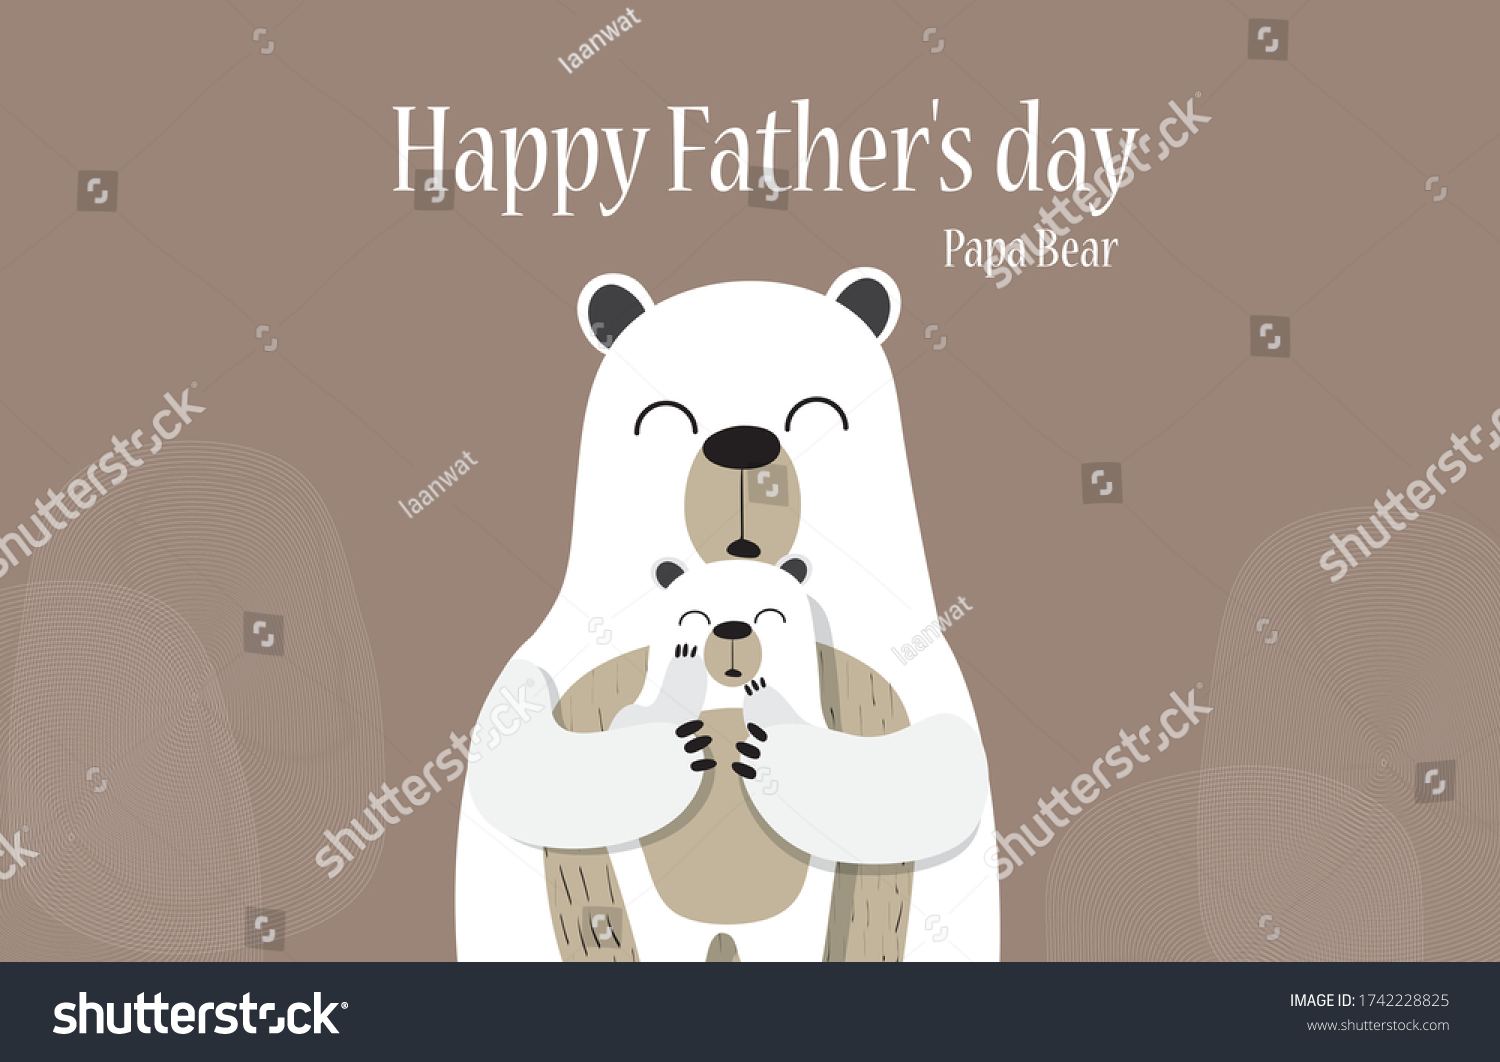 SVG of PAPA MAMA BEAR, PAPA BEAR HAPPY Father's day card template design. svg